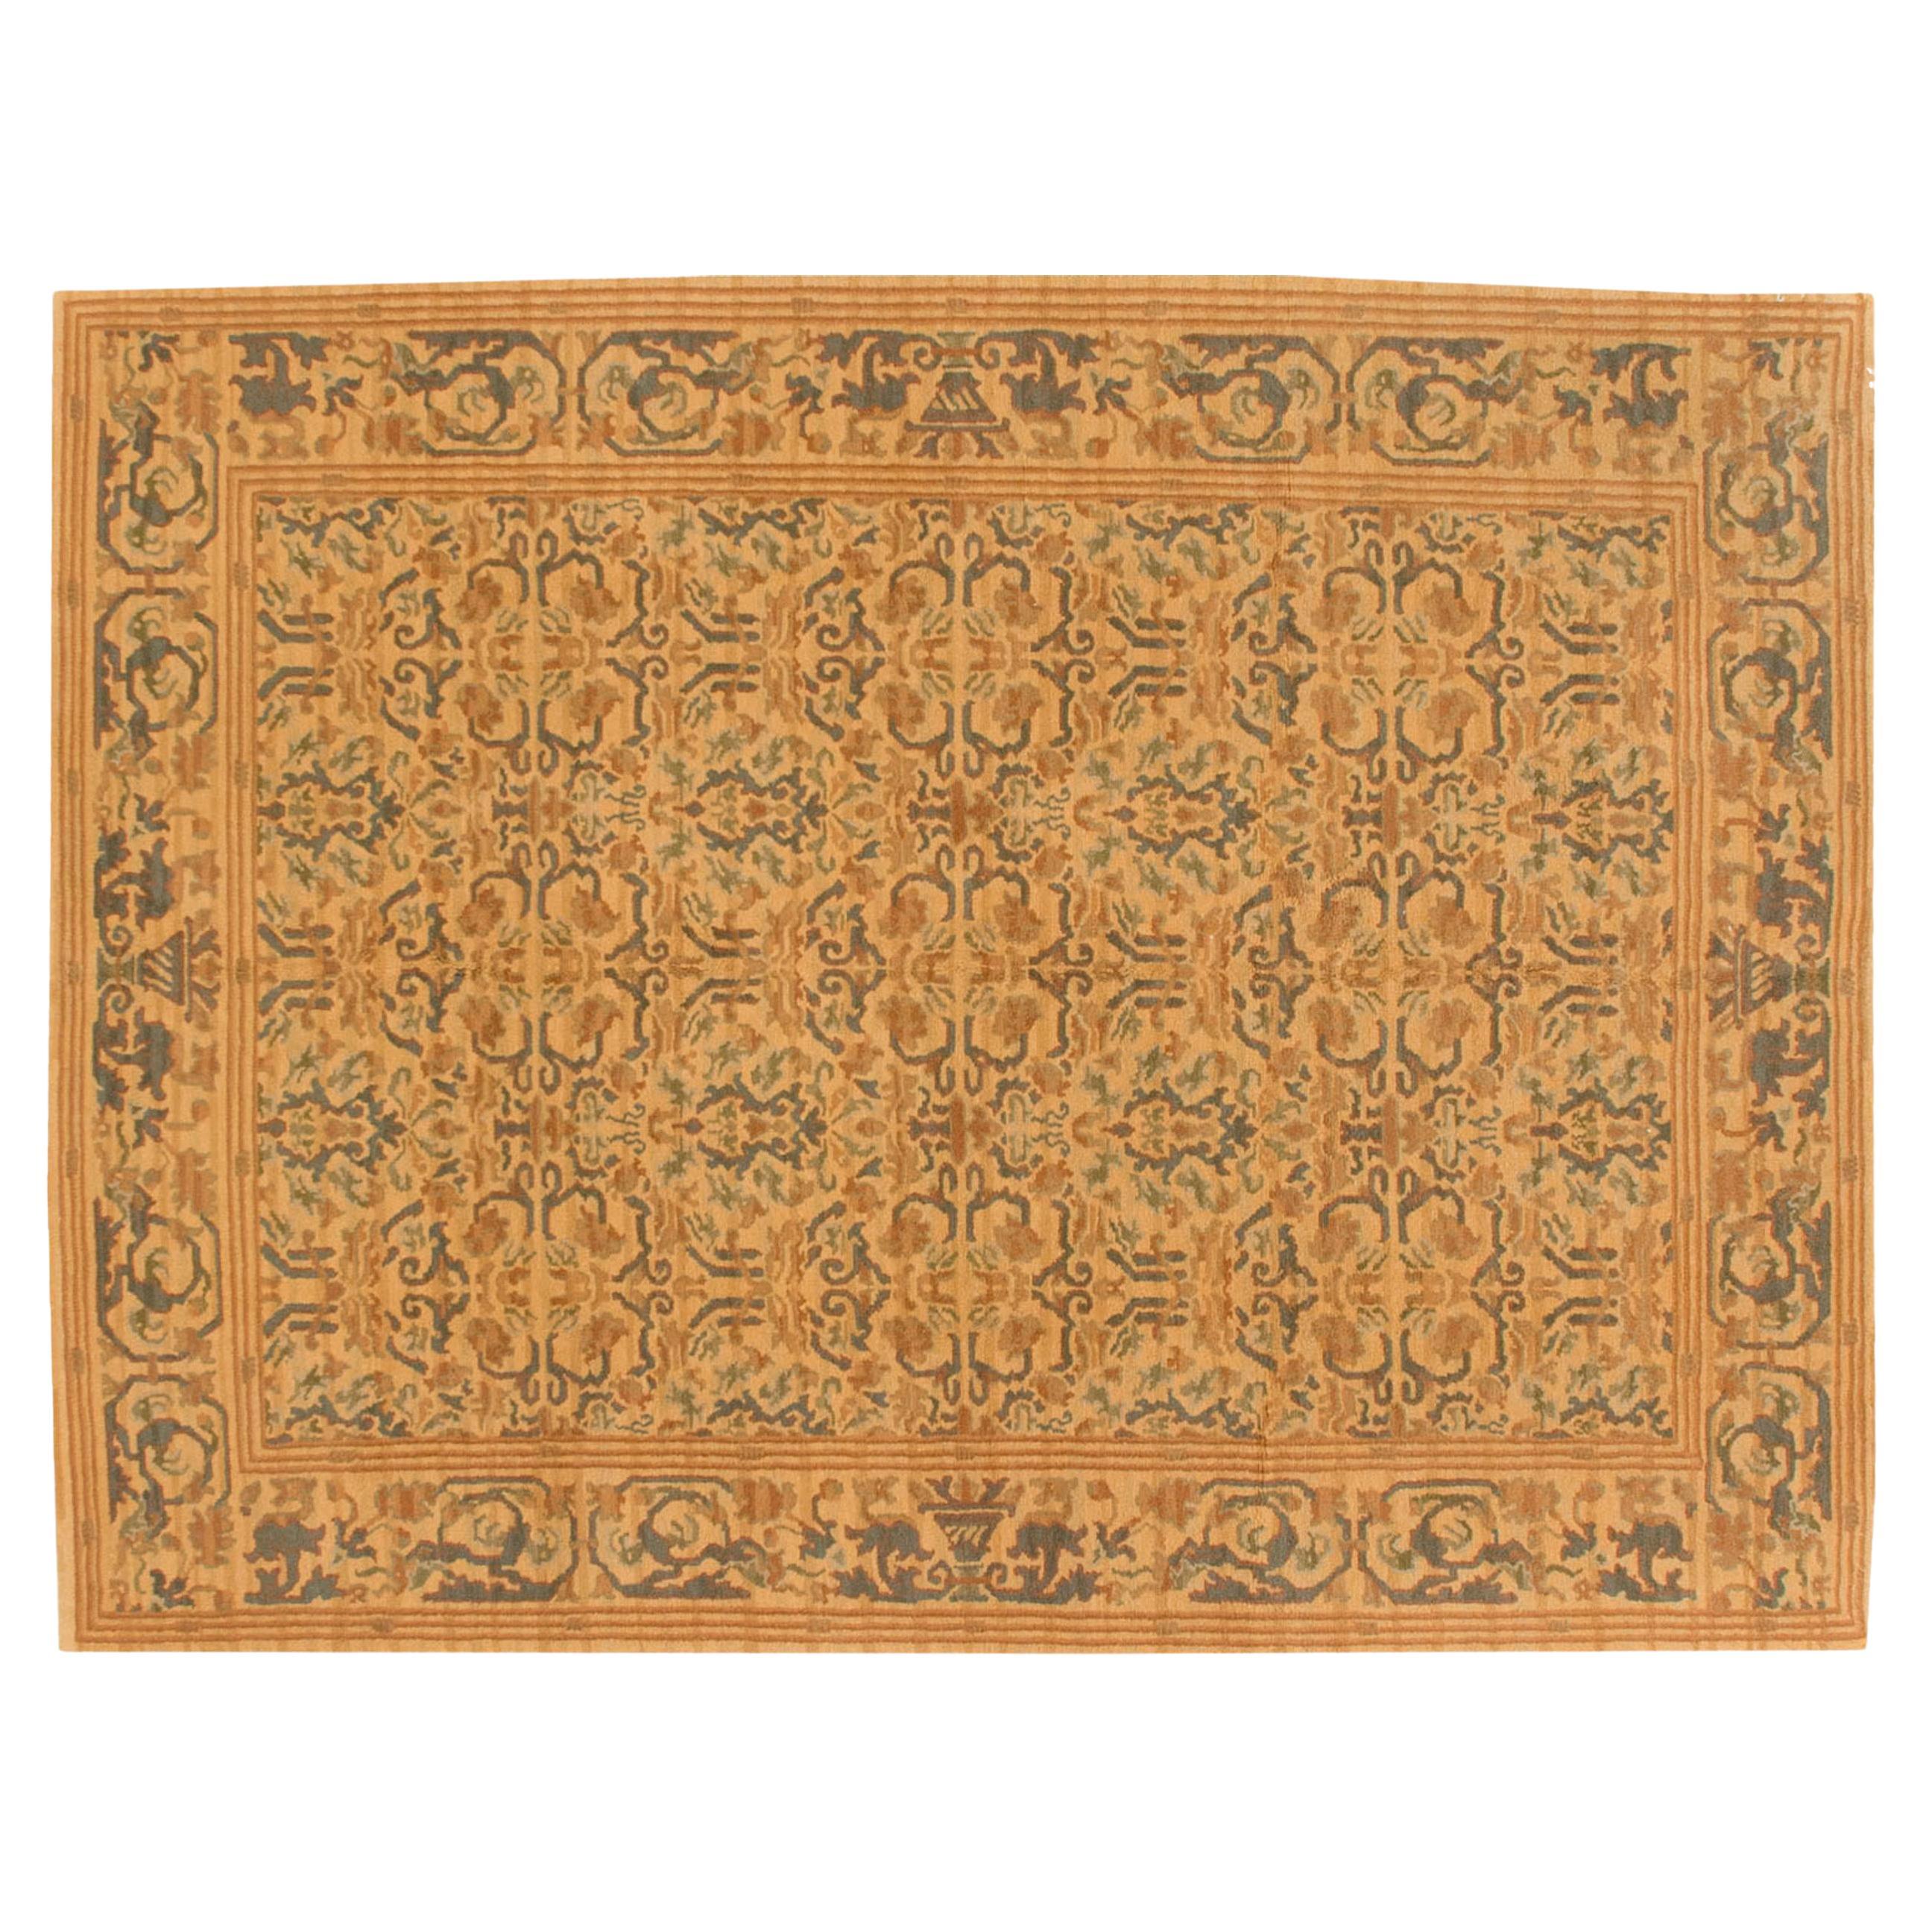 Vintage Spanish Arts And Crafts Design Carpet